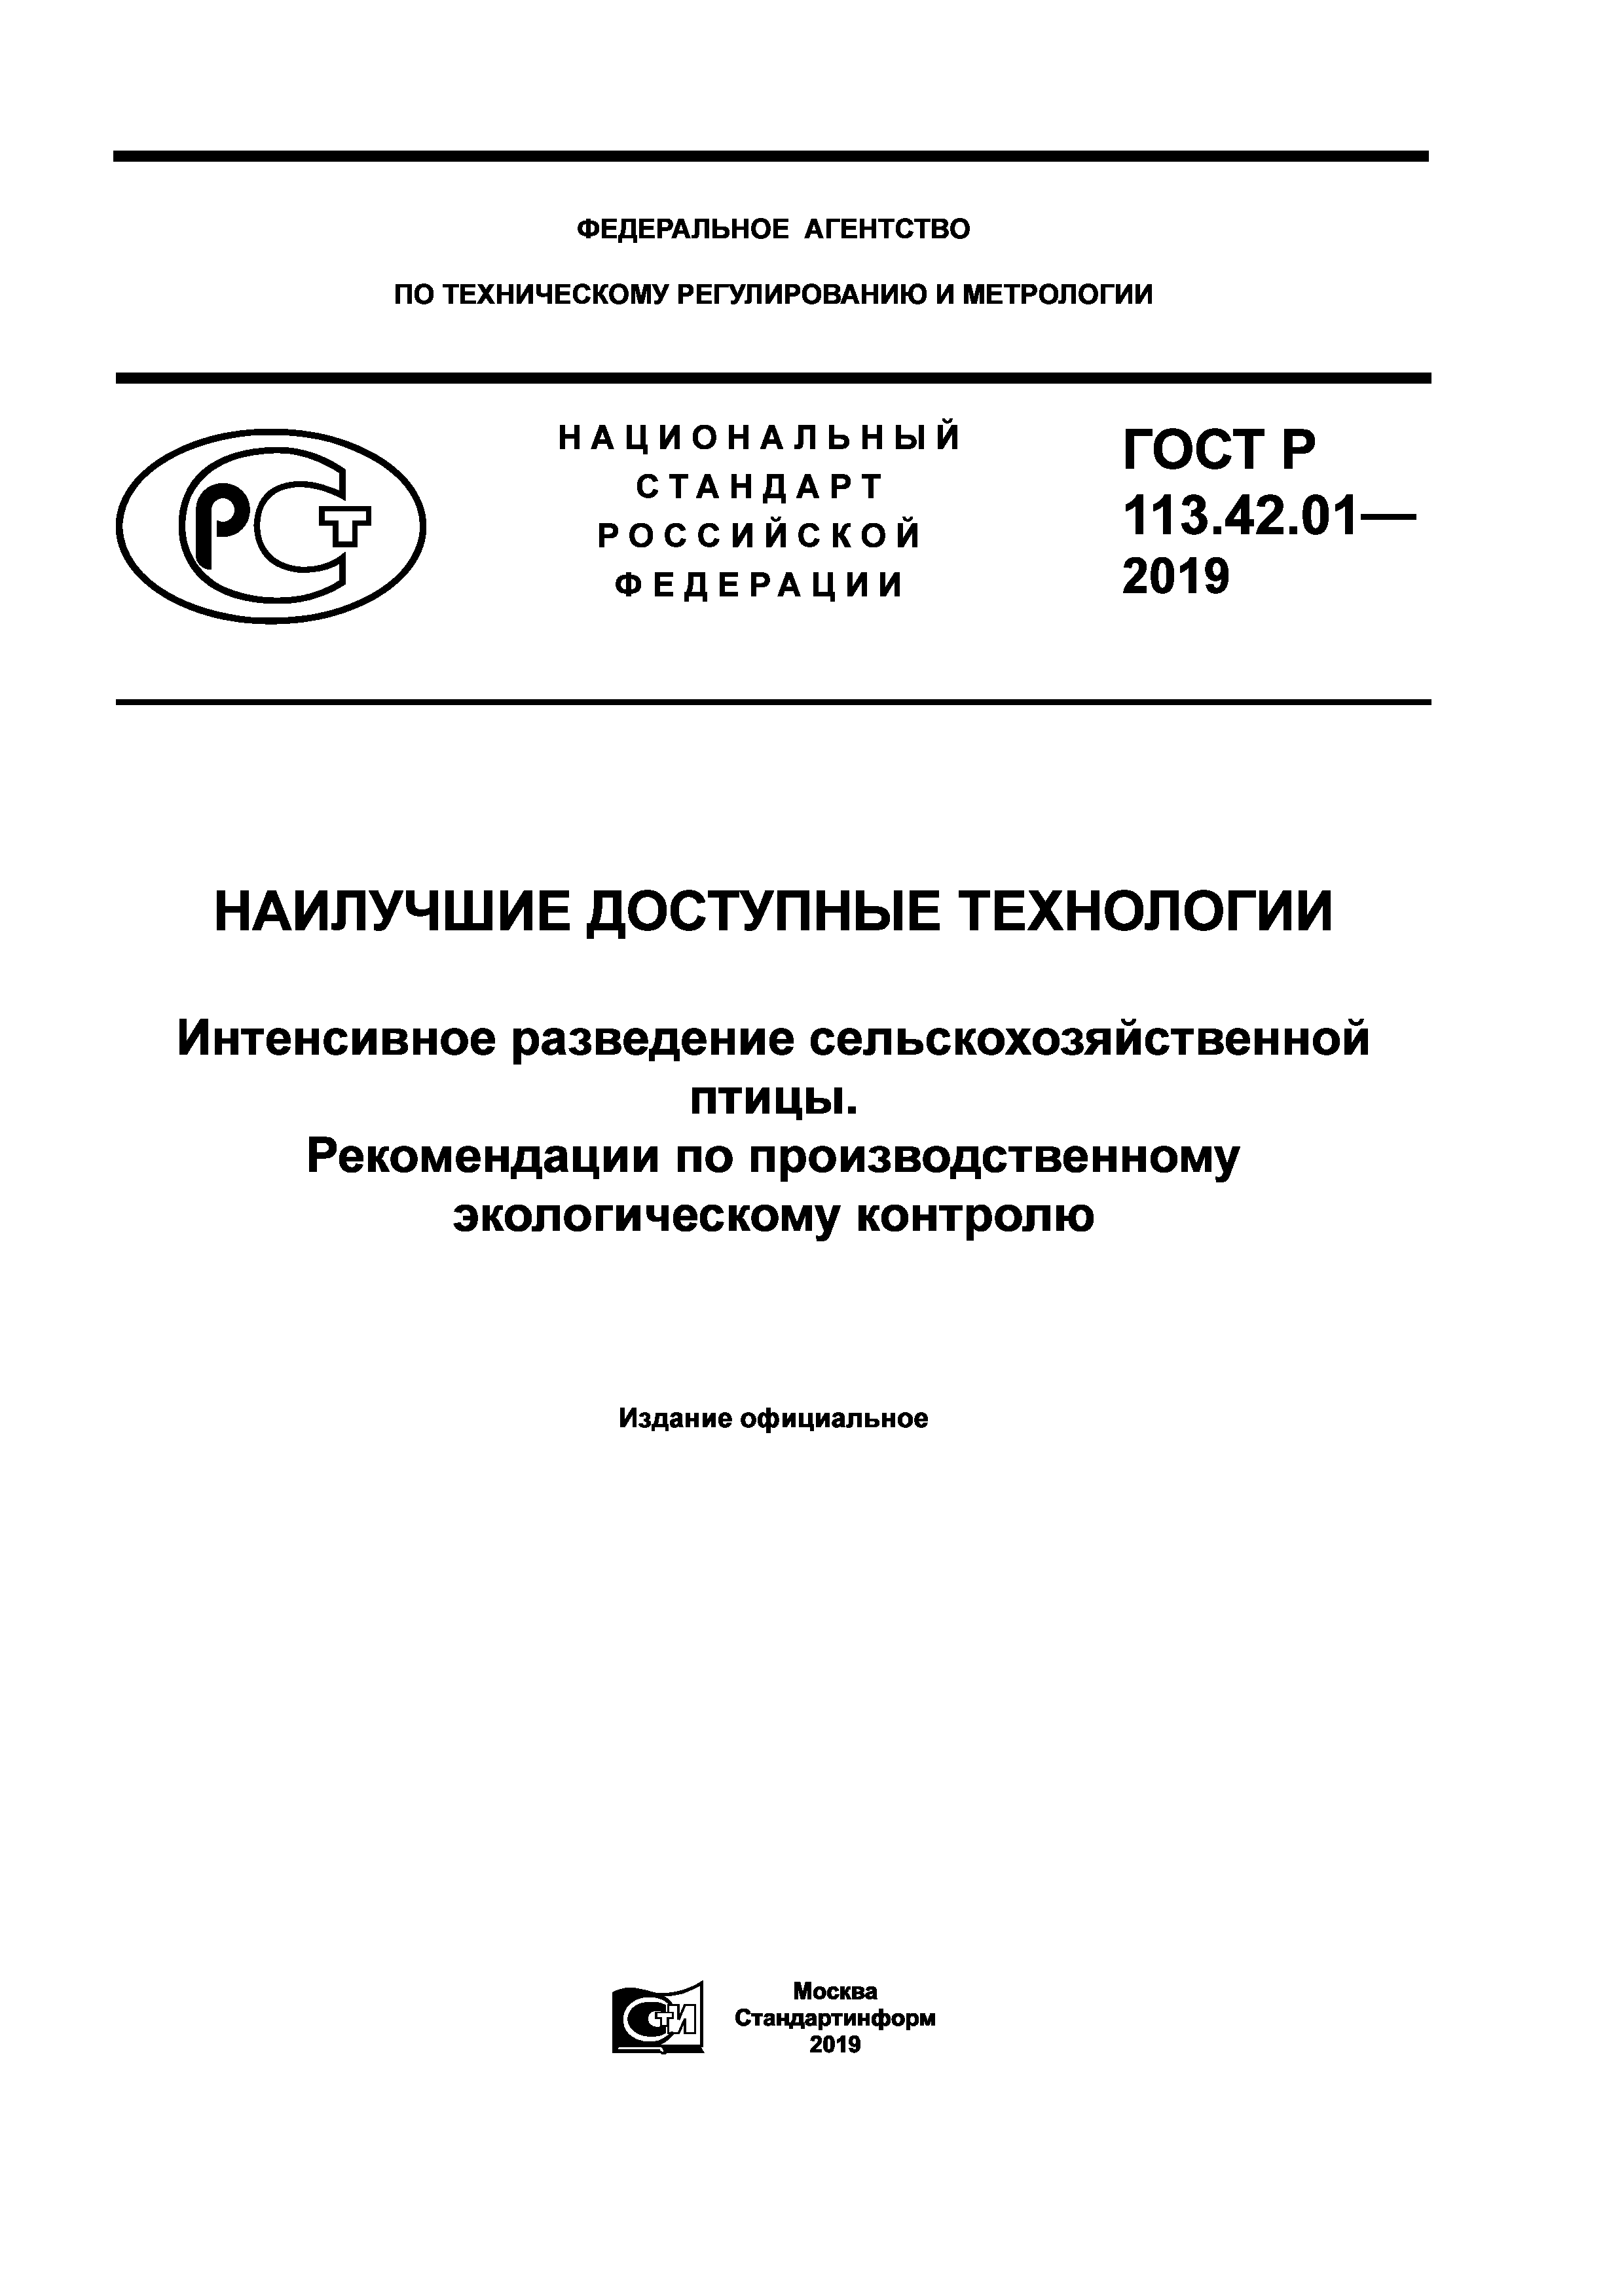 ГОСТ Р 113.42.01-2019